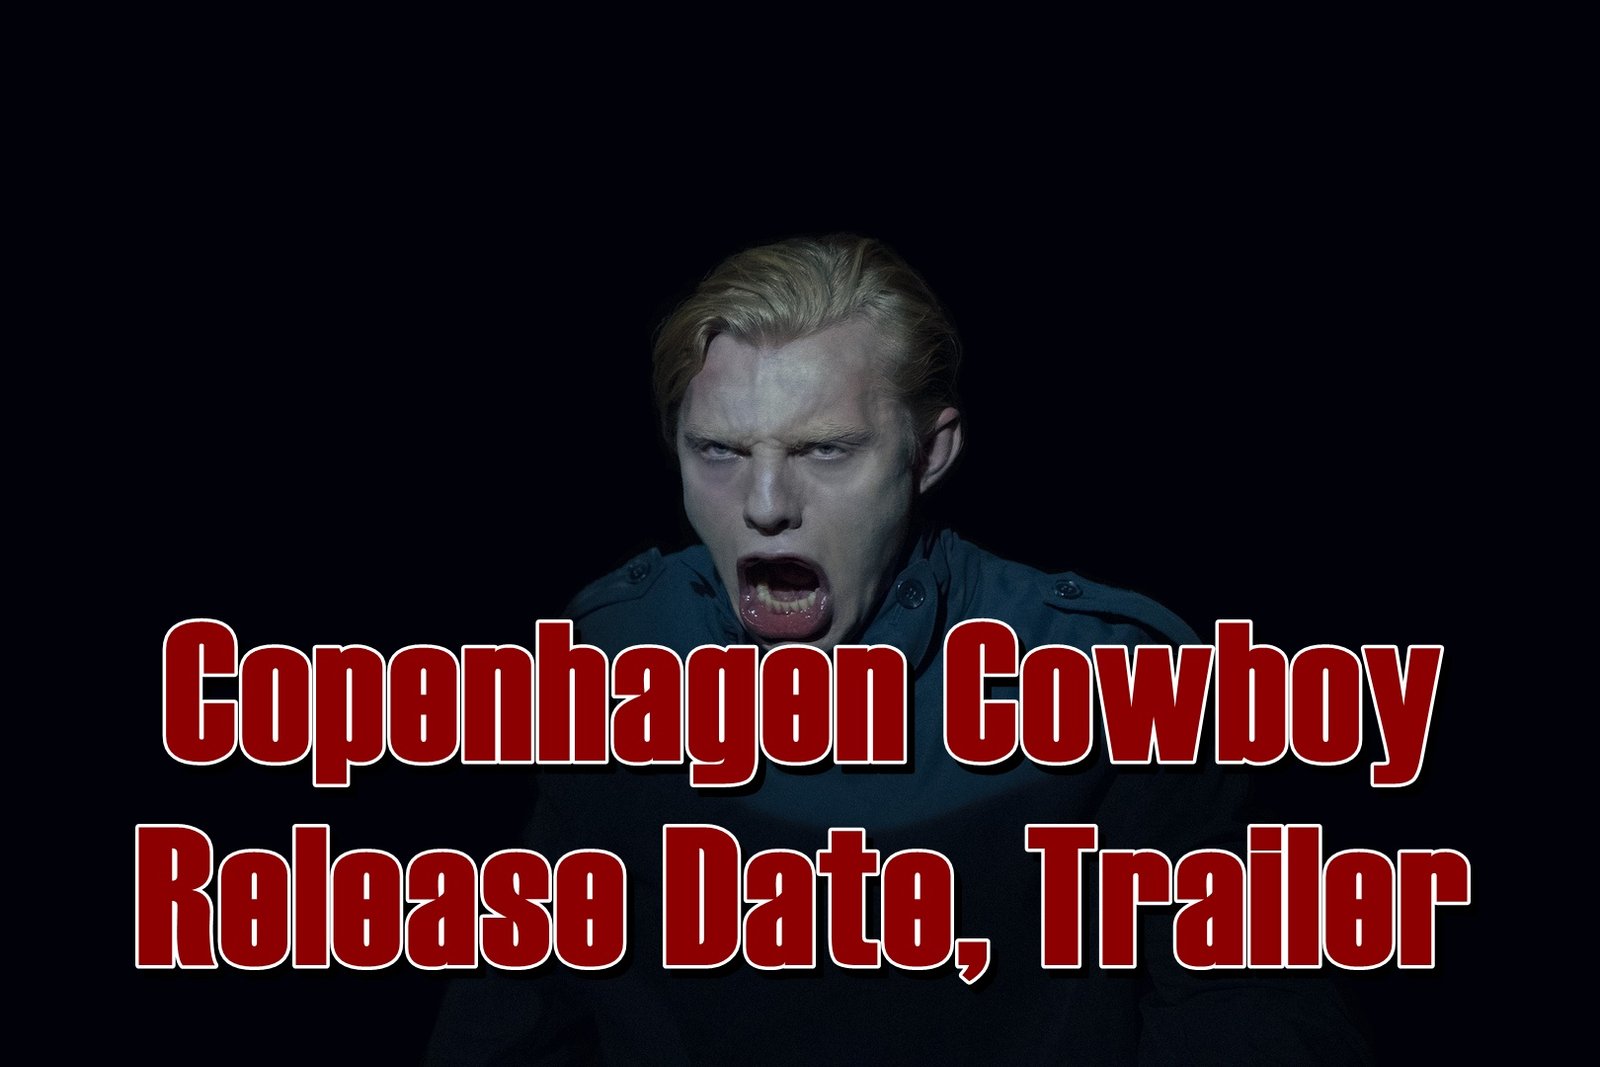 Copenhagen Cowboy Release Date, Trailer